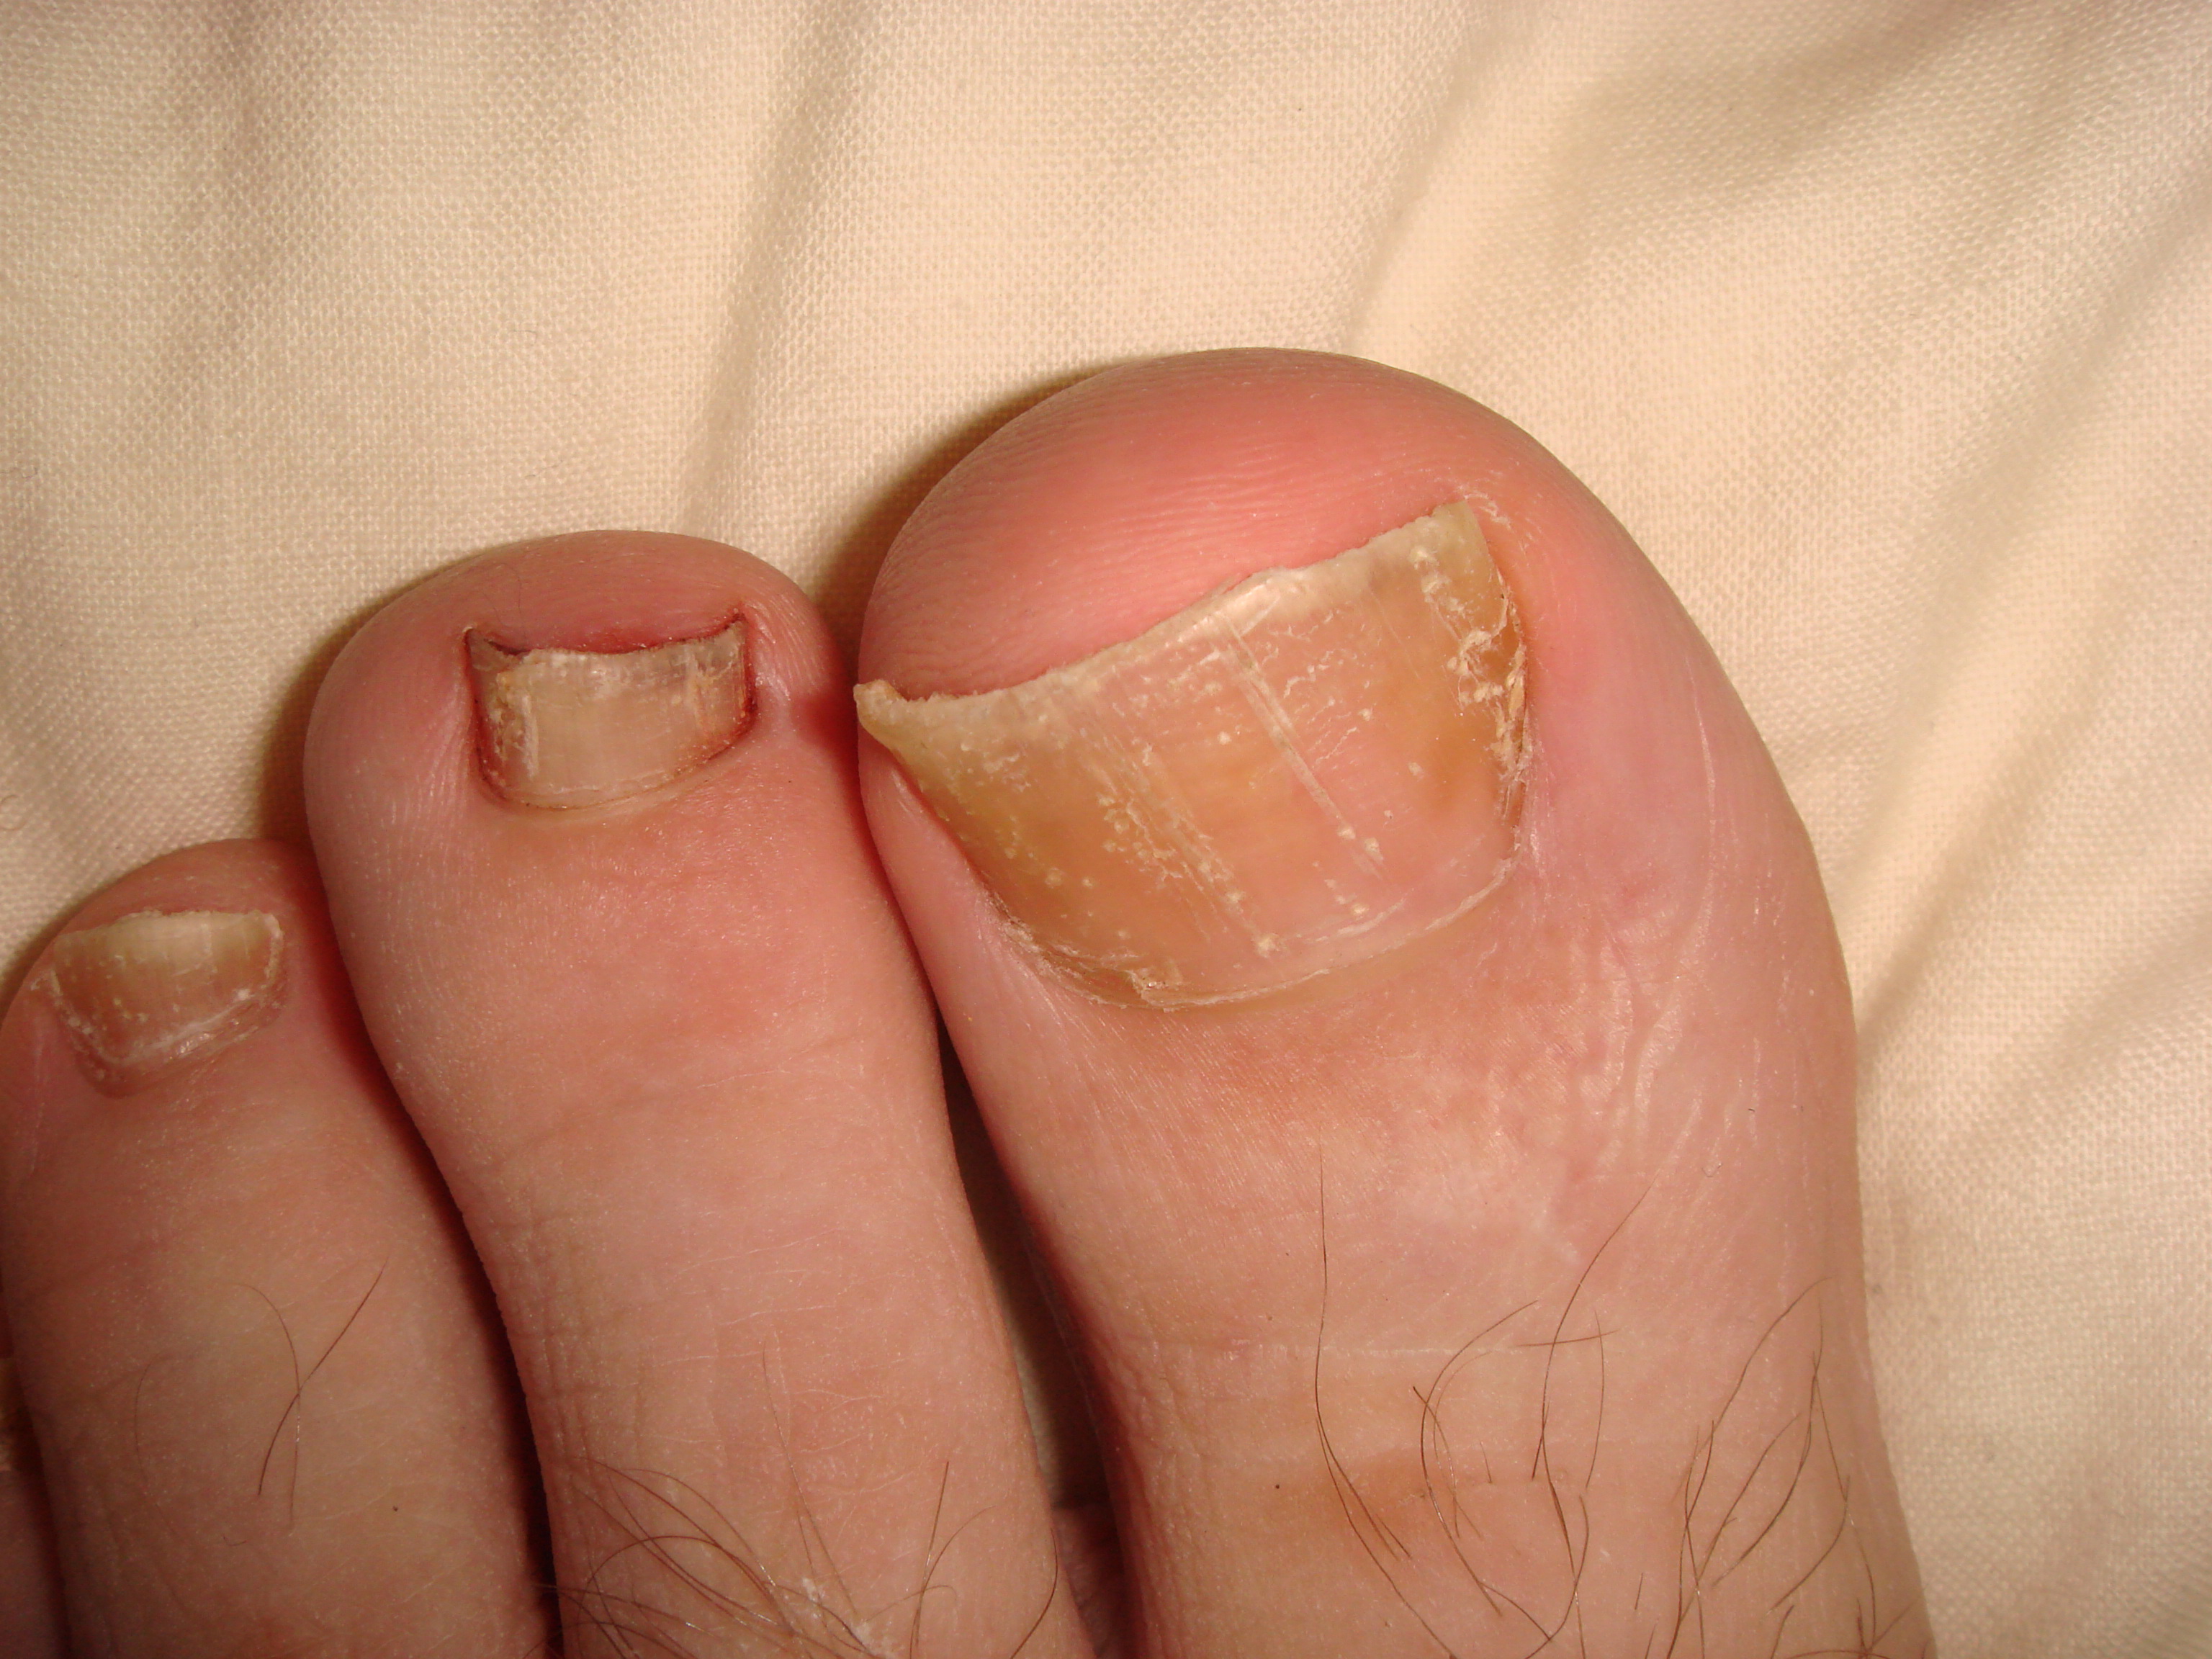 https://www.papaa.org/media/3252/psoriasis-on-toe-nails.jpg?center=0.5,0.5&mode=crop